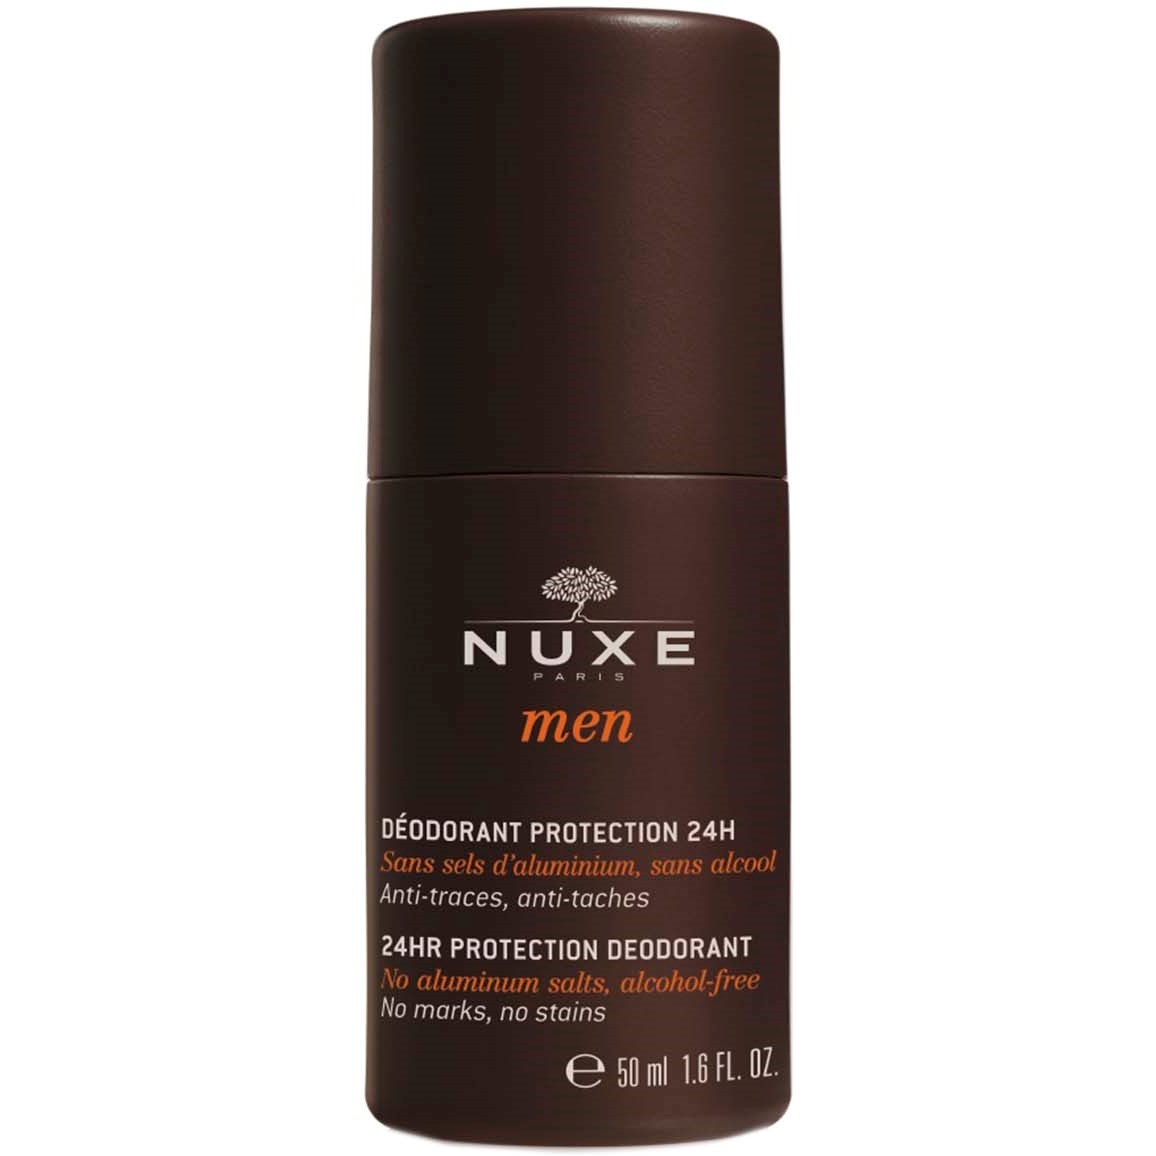 Nuxe Men 4HR Protection Deodorant 50 ml